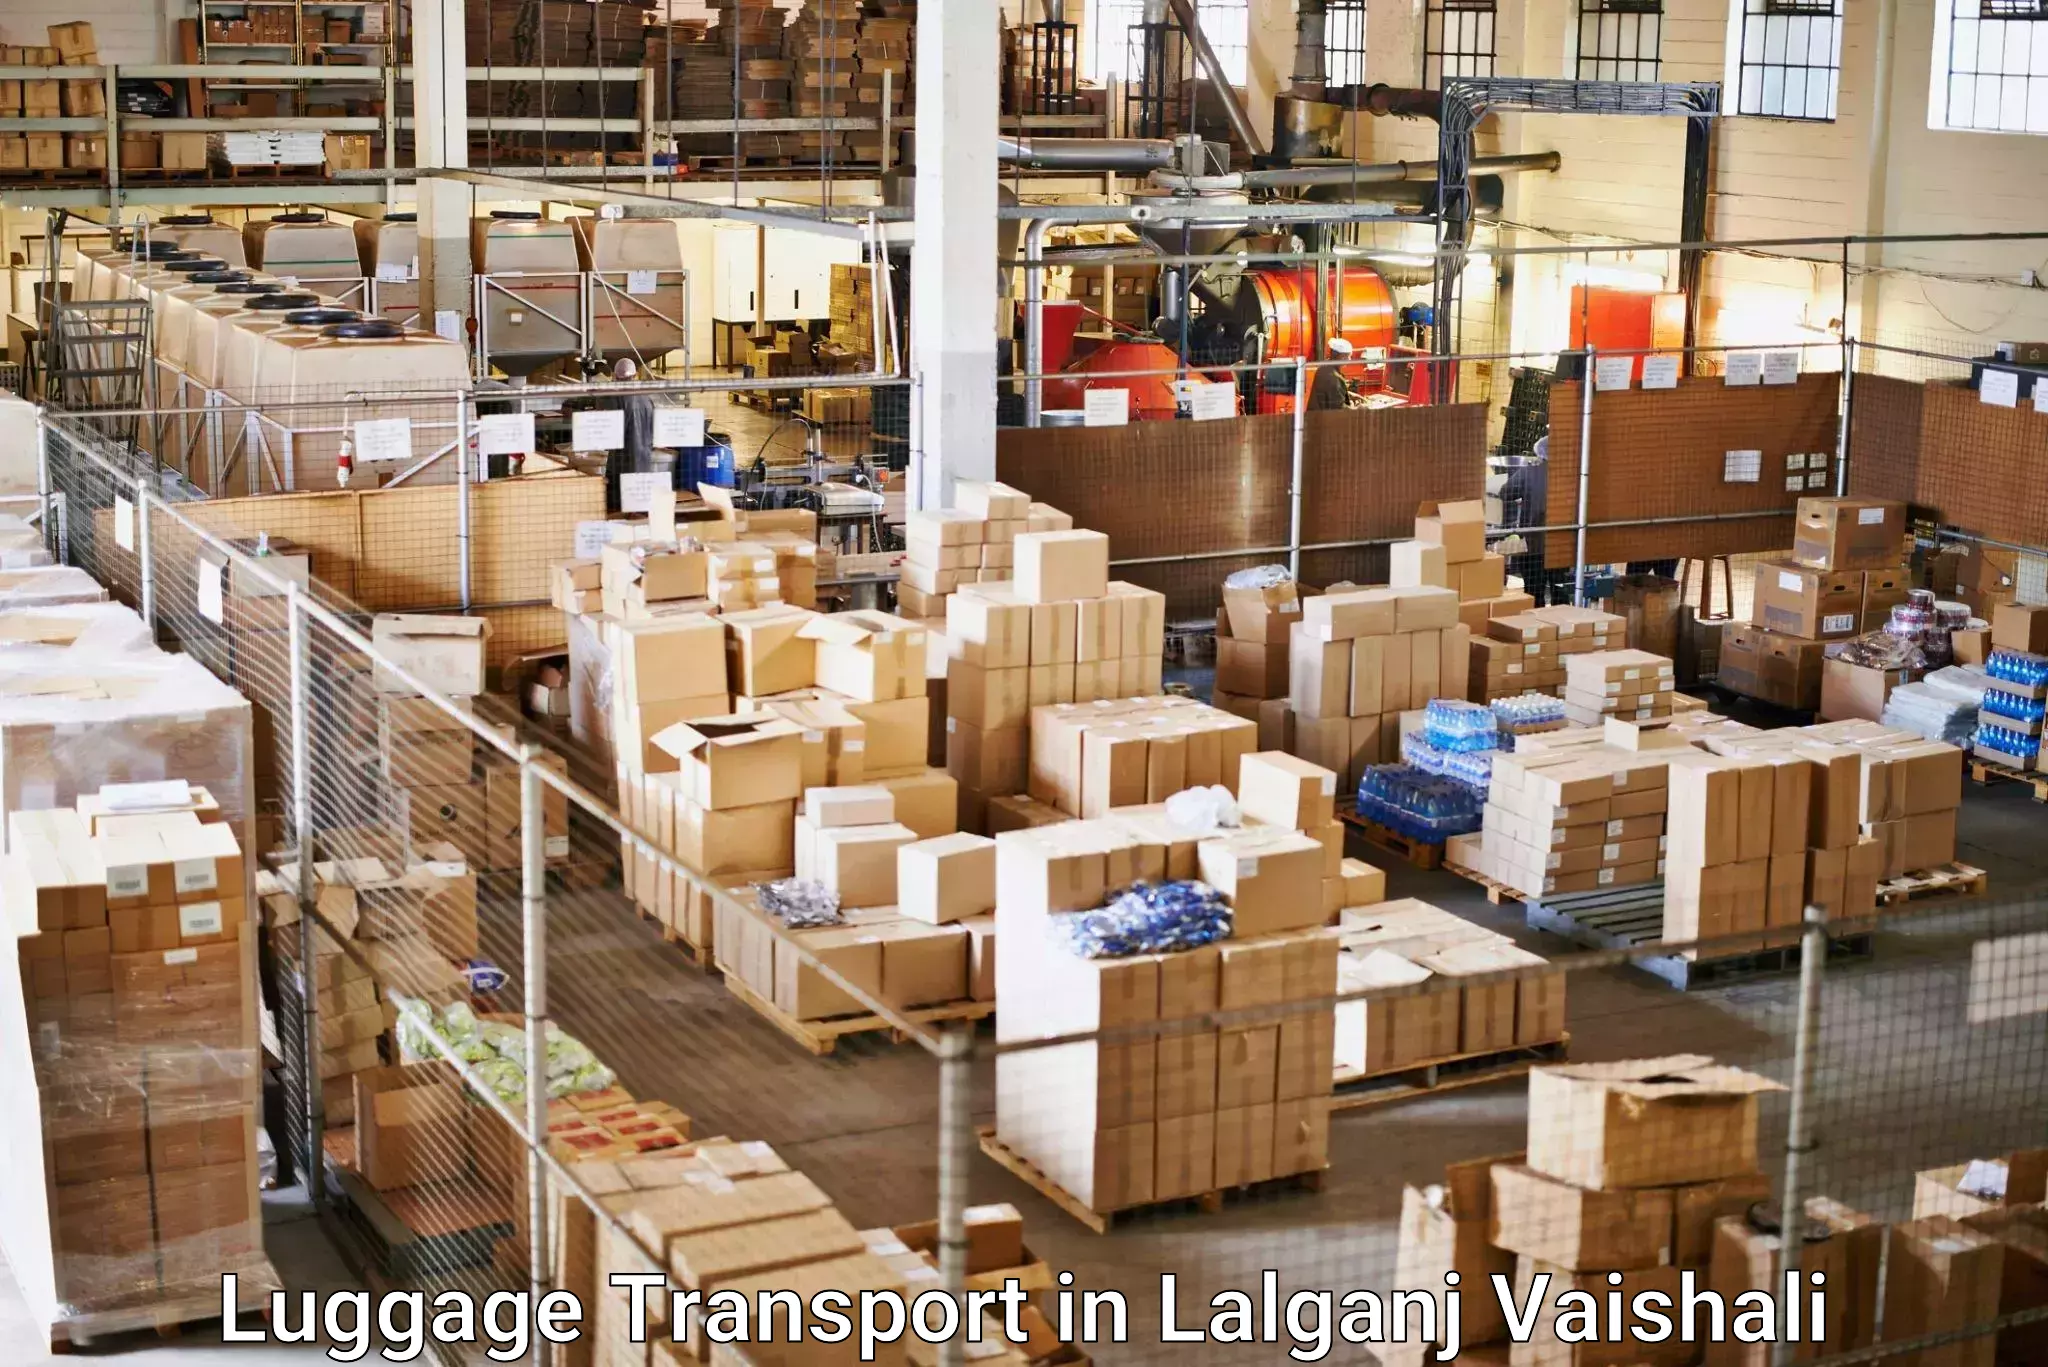 Luggage transport company in Lalganj Vaishali